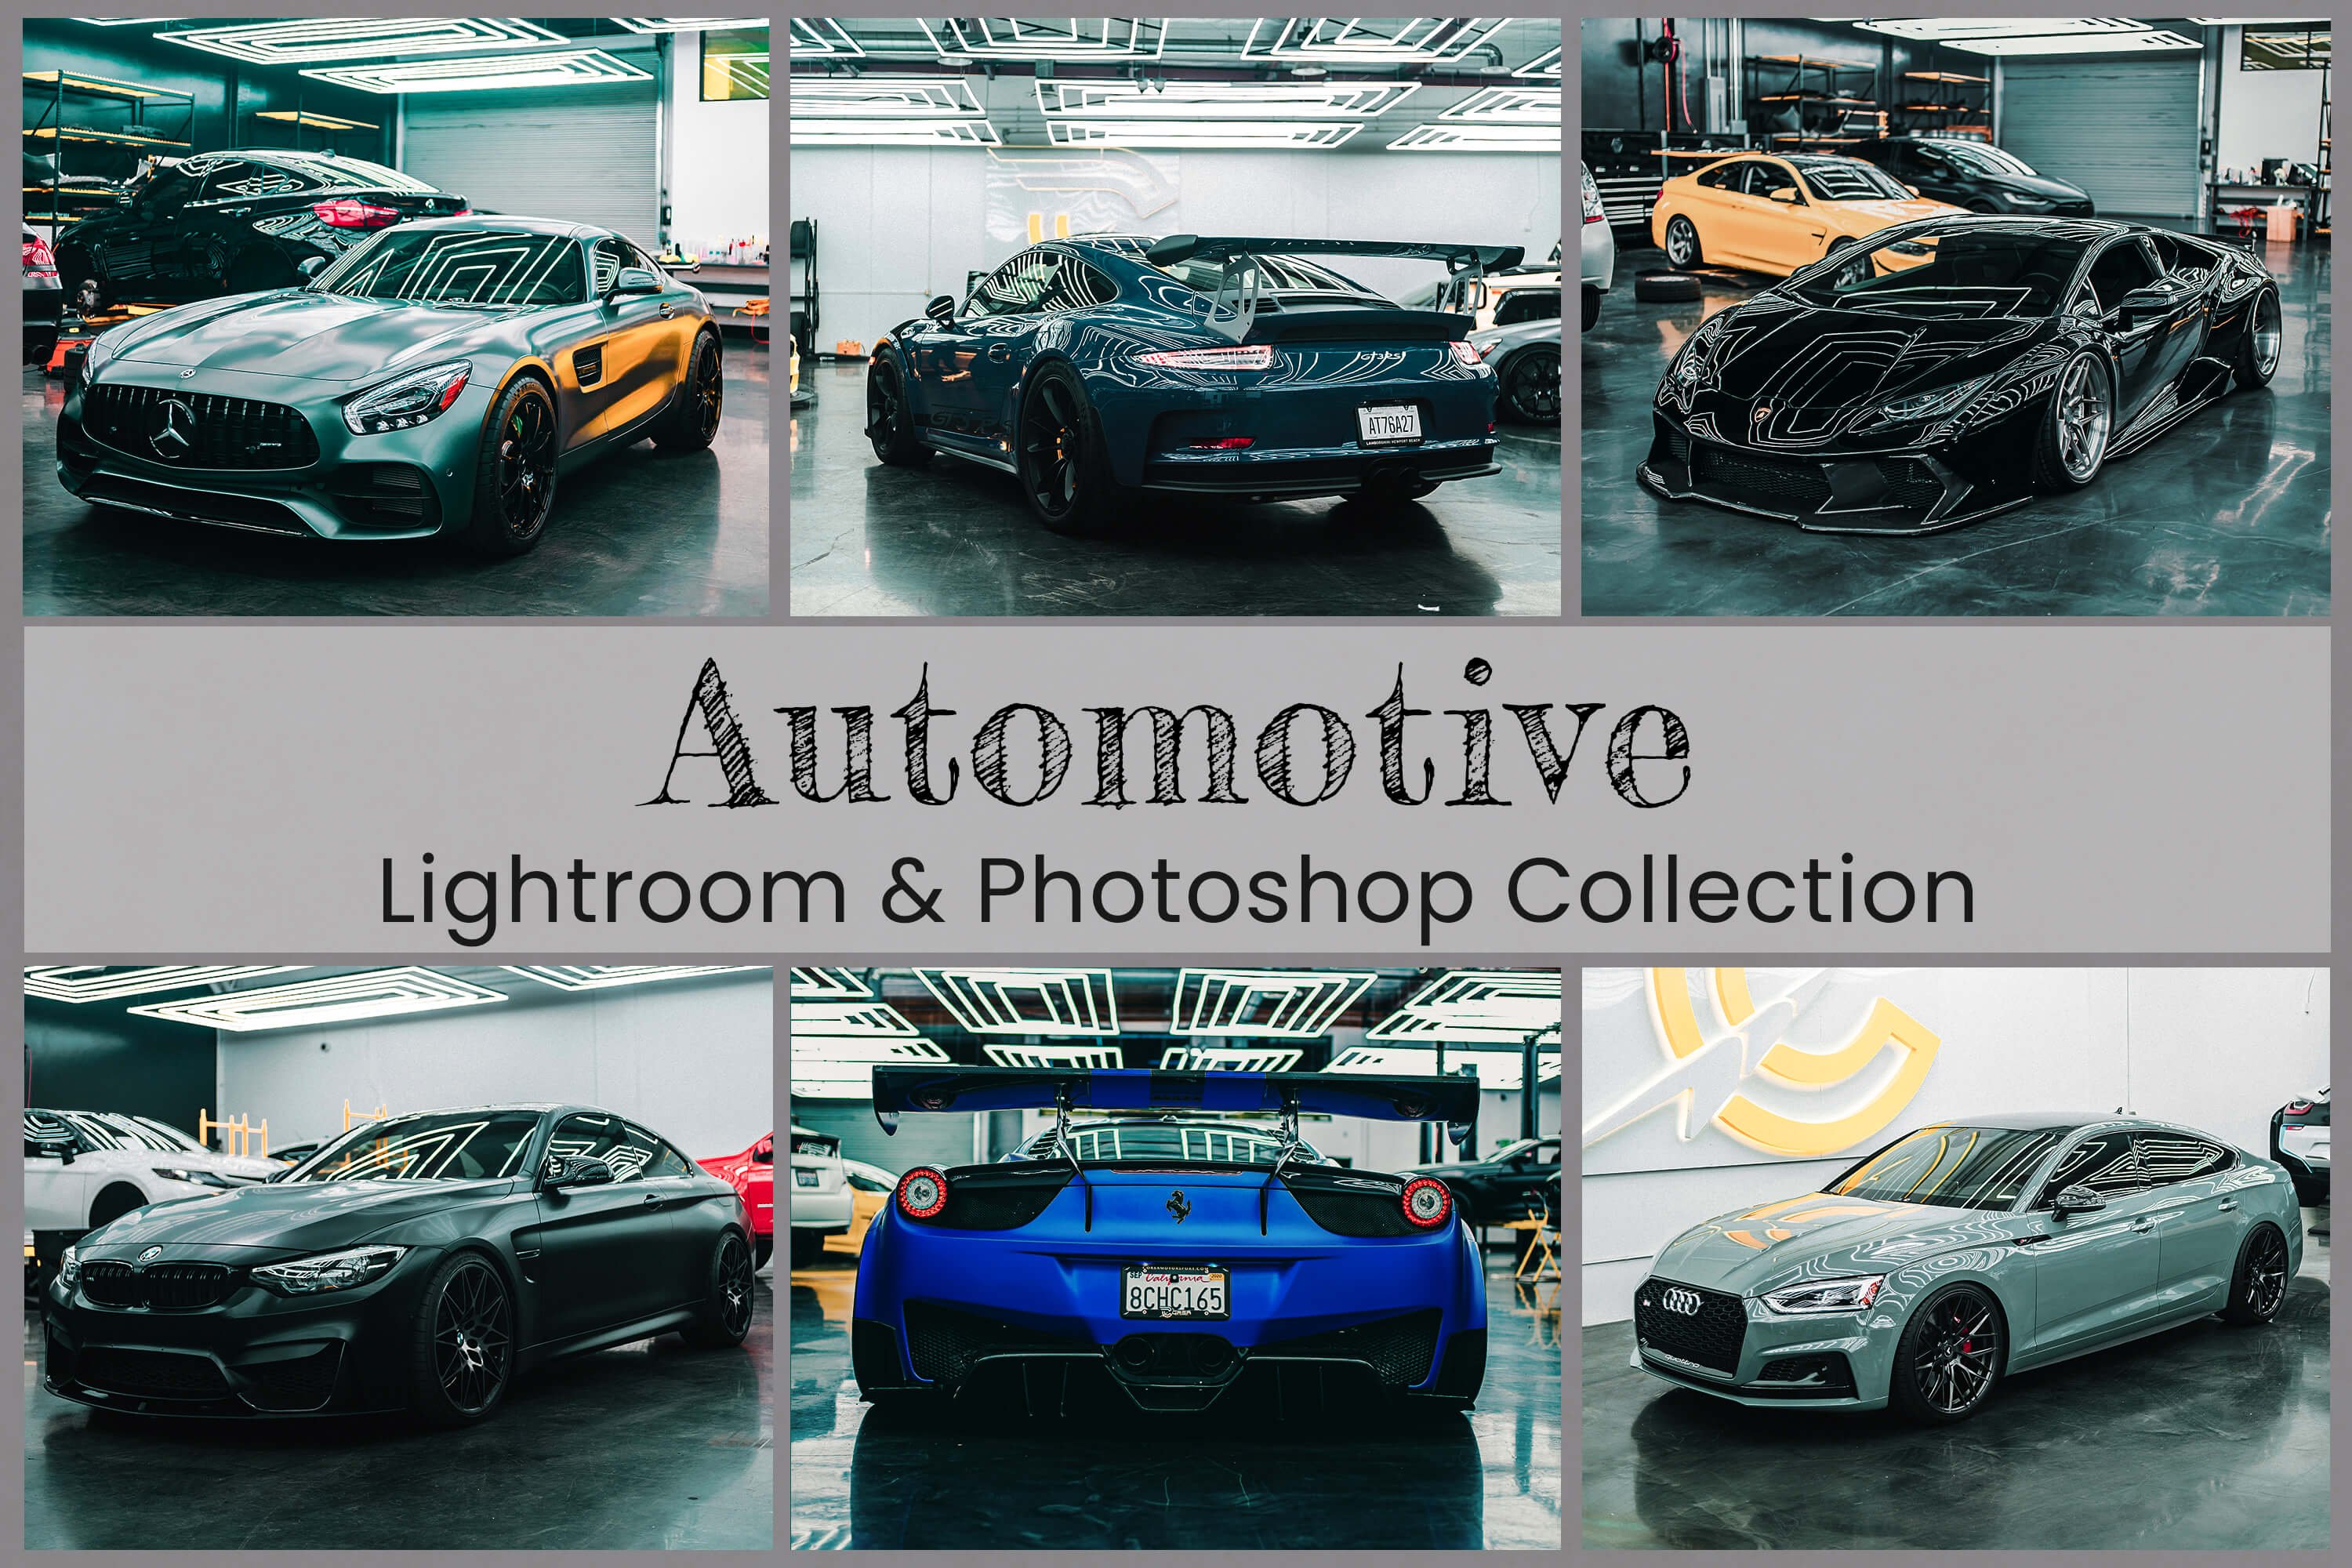 Automotive Lightroom Photoshop LUTscover image.